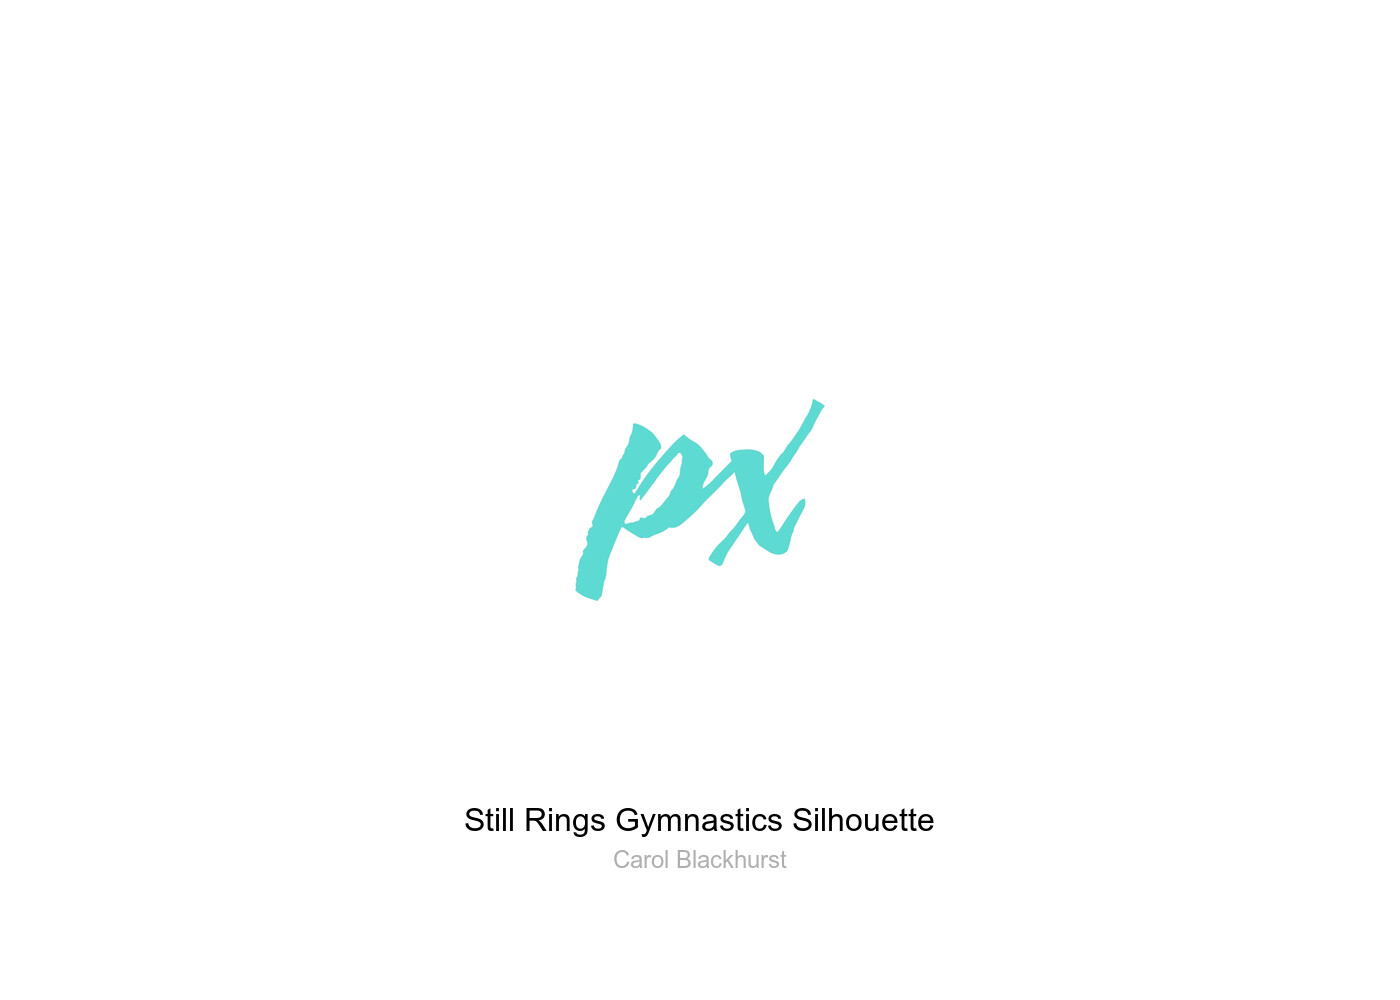 Still Rings Gymnastics Silhouette Greeting Card by Carol Blackhurst